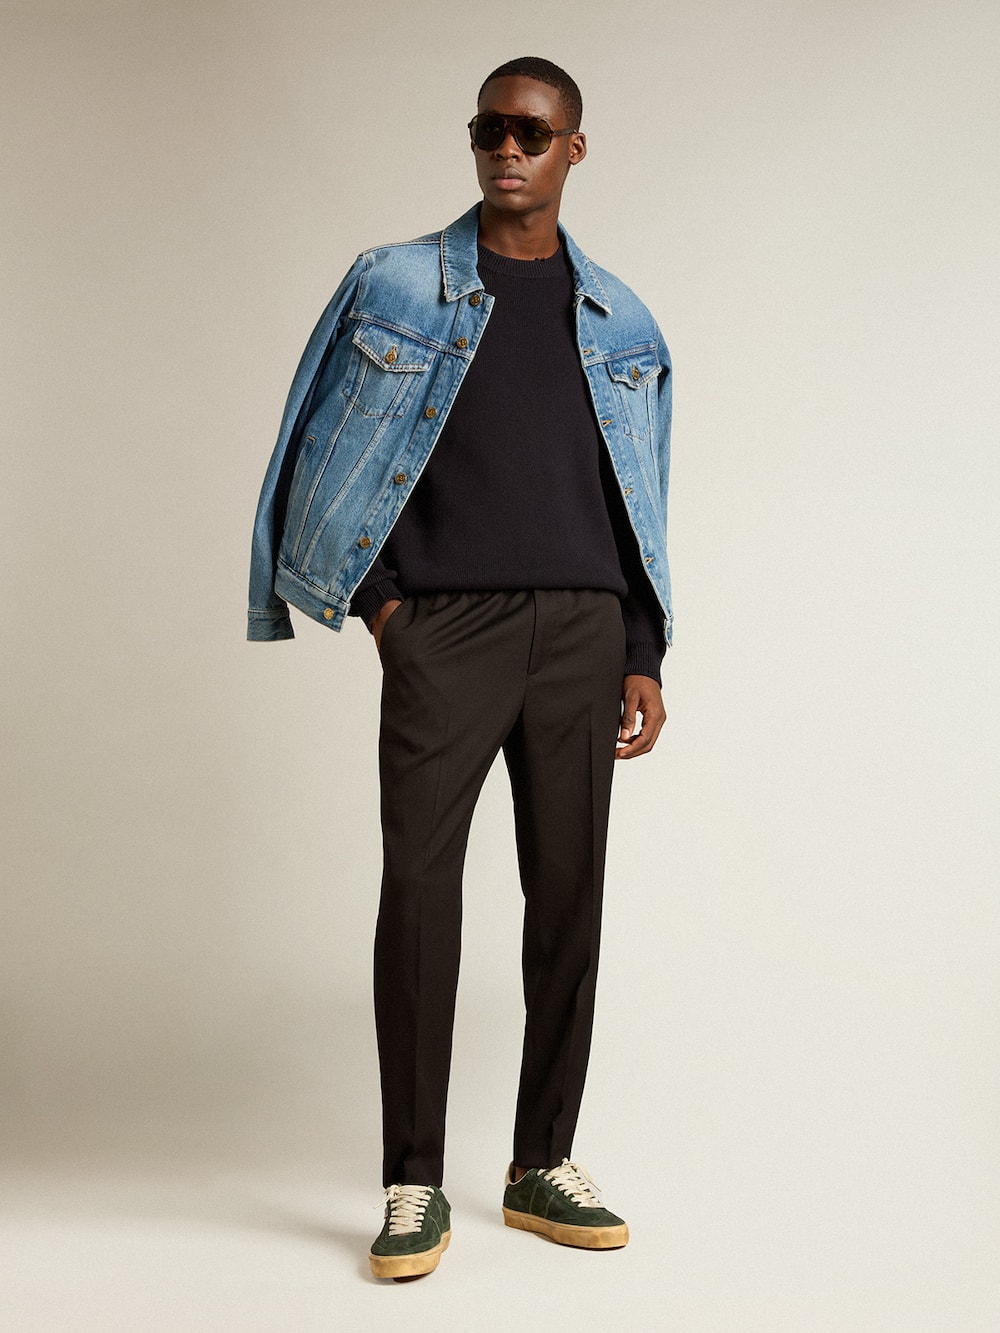 Golden Goose - Jaqueta jeans masculina com lavagem média in 